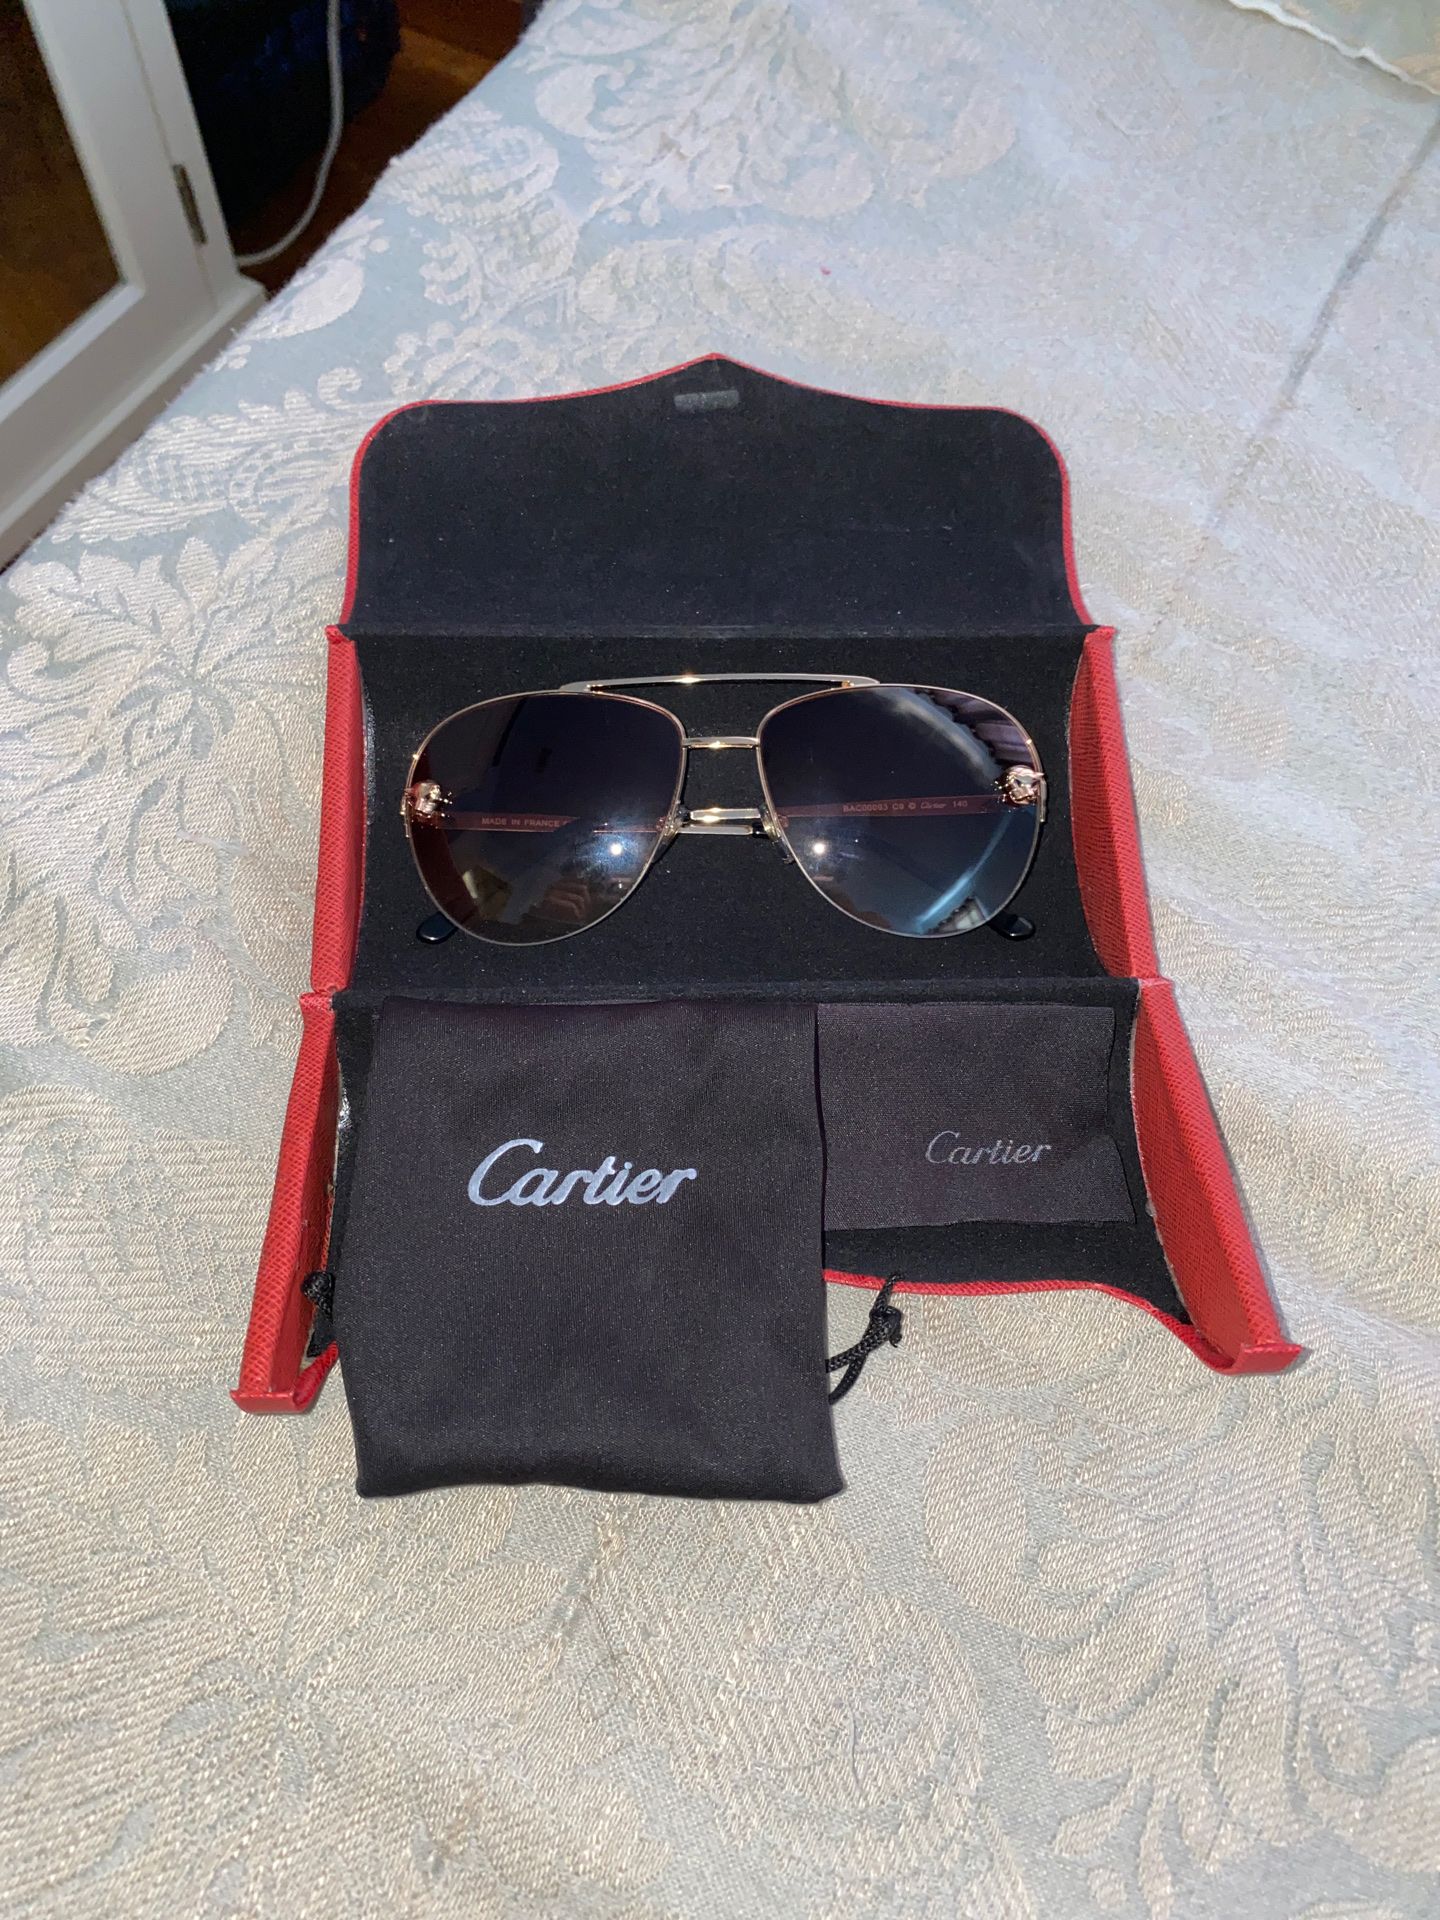 Cartier Sunglasses for sale 500$